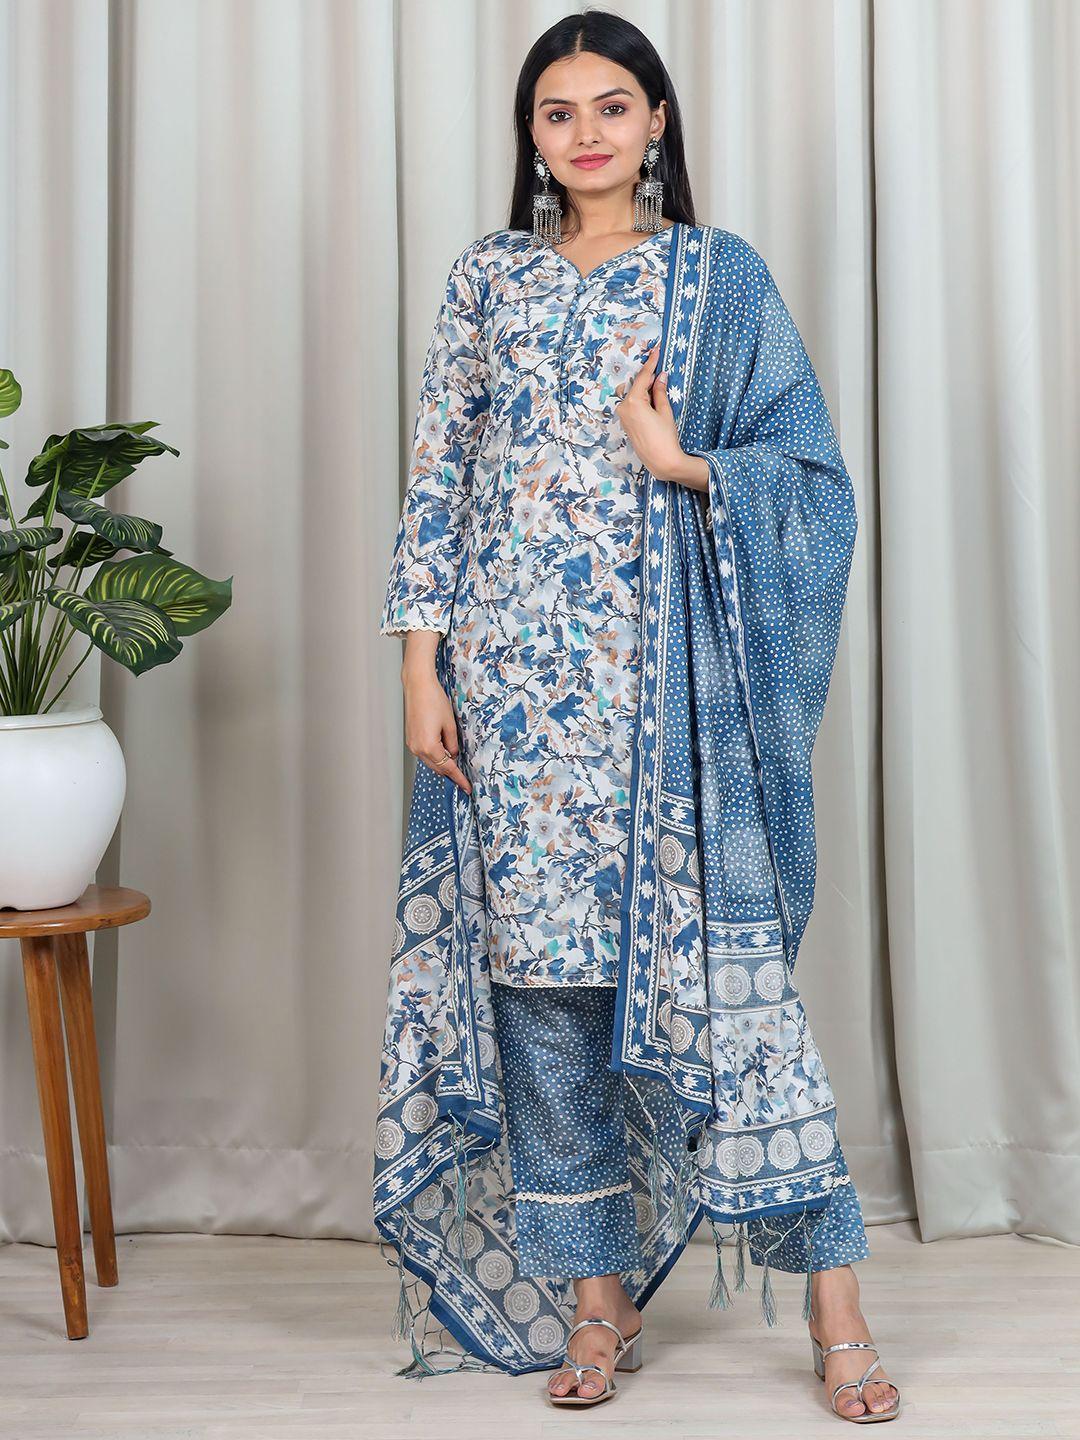 vidraa western store women blue floral printed regular chanderi cotton kurti with trousers & with dupatta